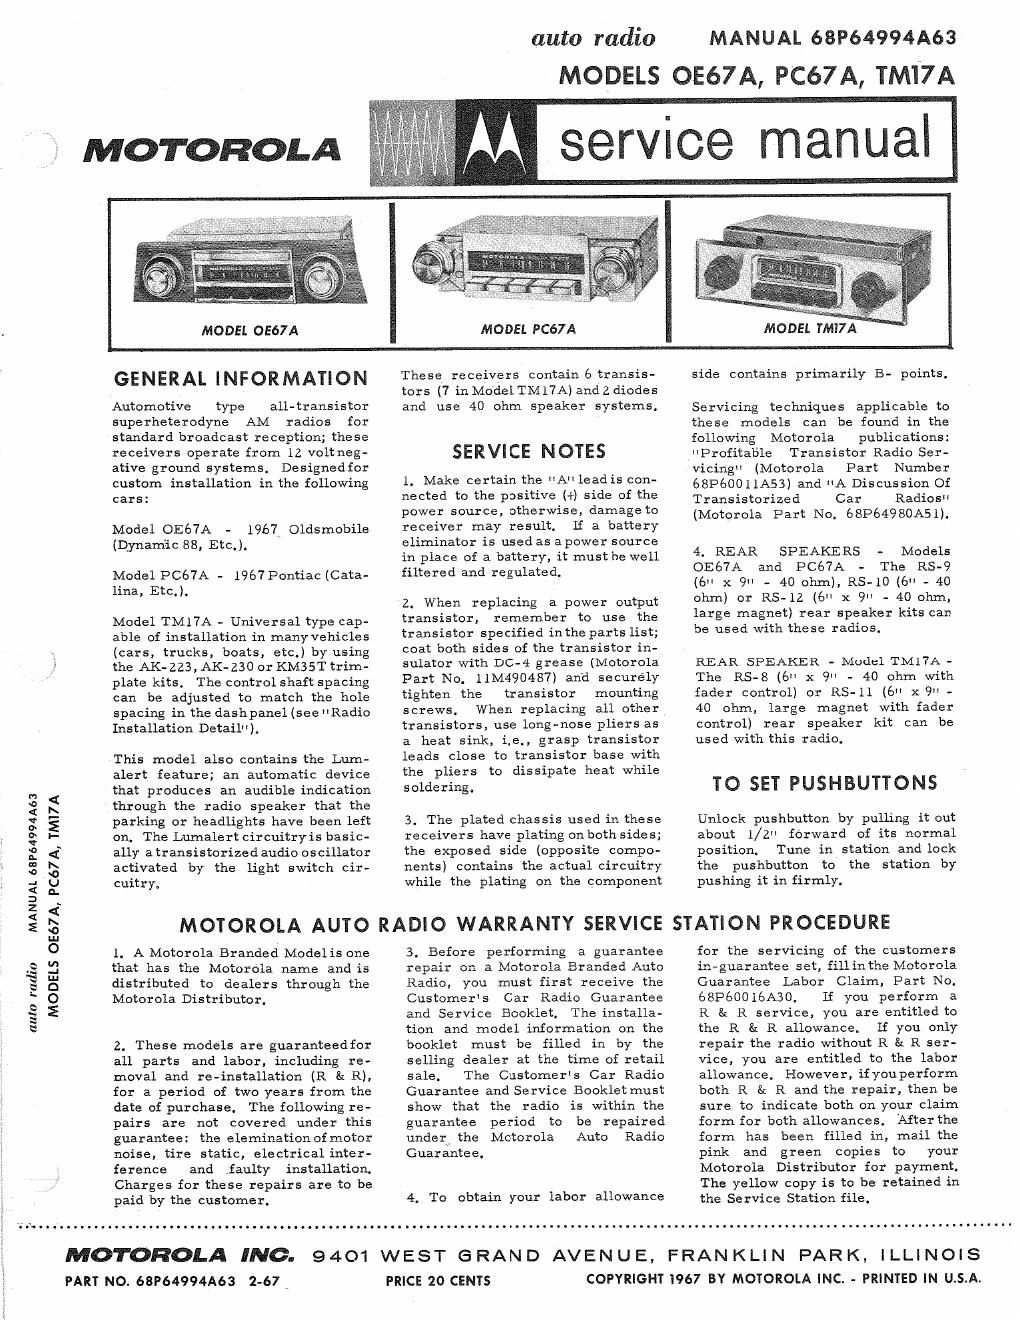 motorola oe 67 a service manual